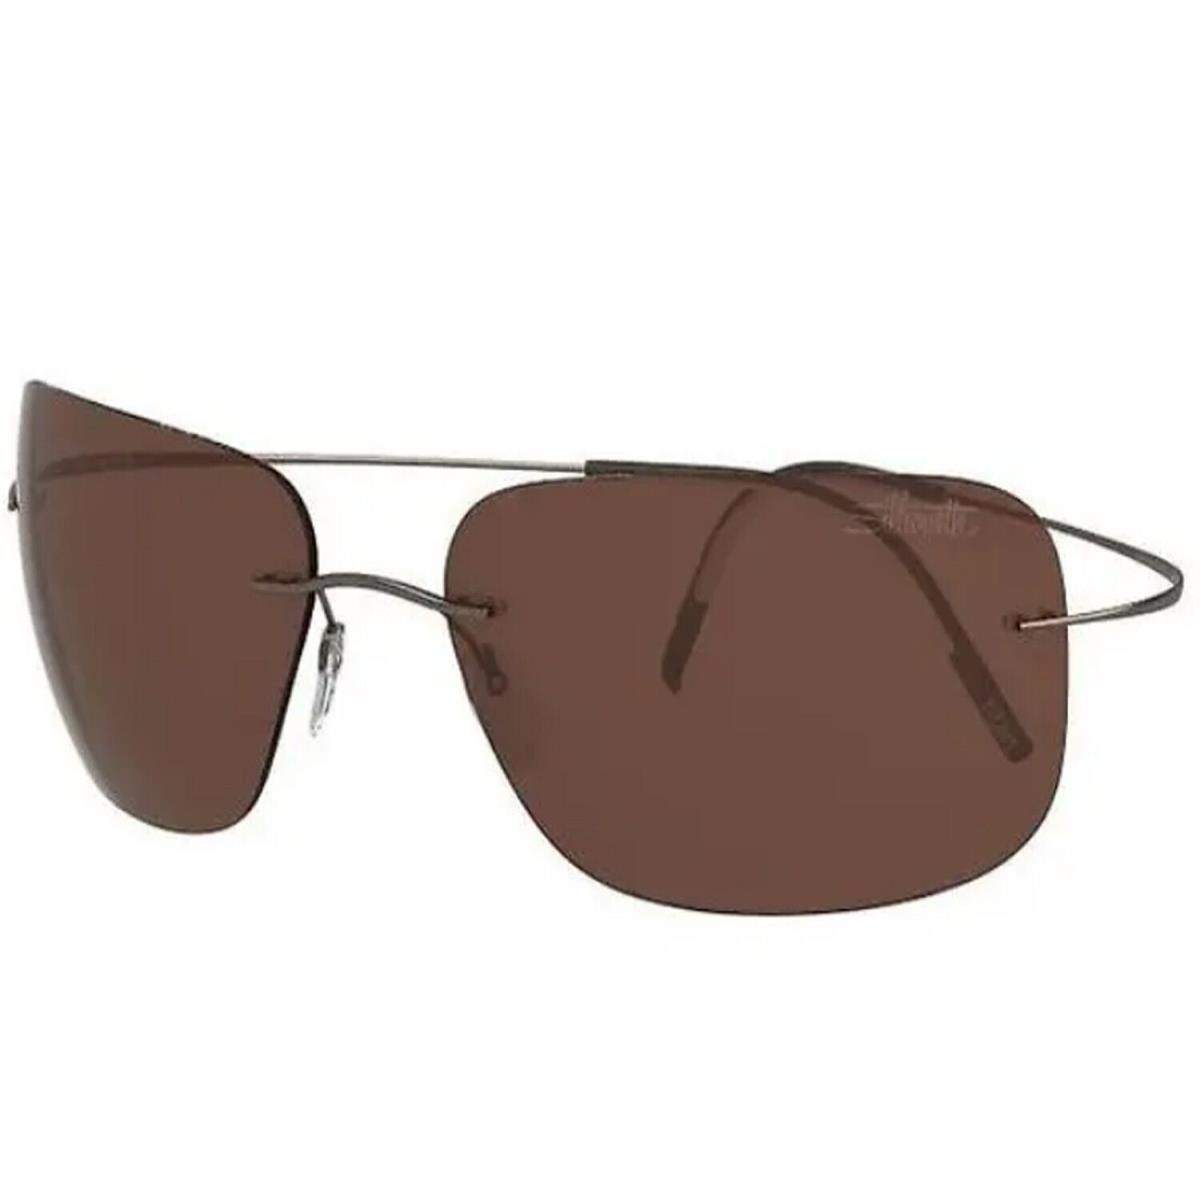 Silhouette Sunglasses Tma Ultra Thin 64/17/135 Polarized Brown 8723/75-7530